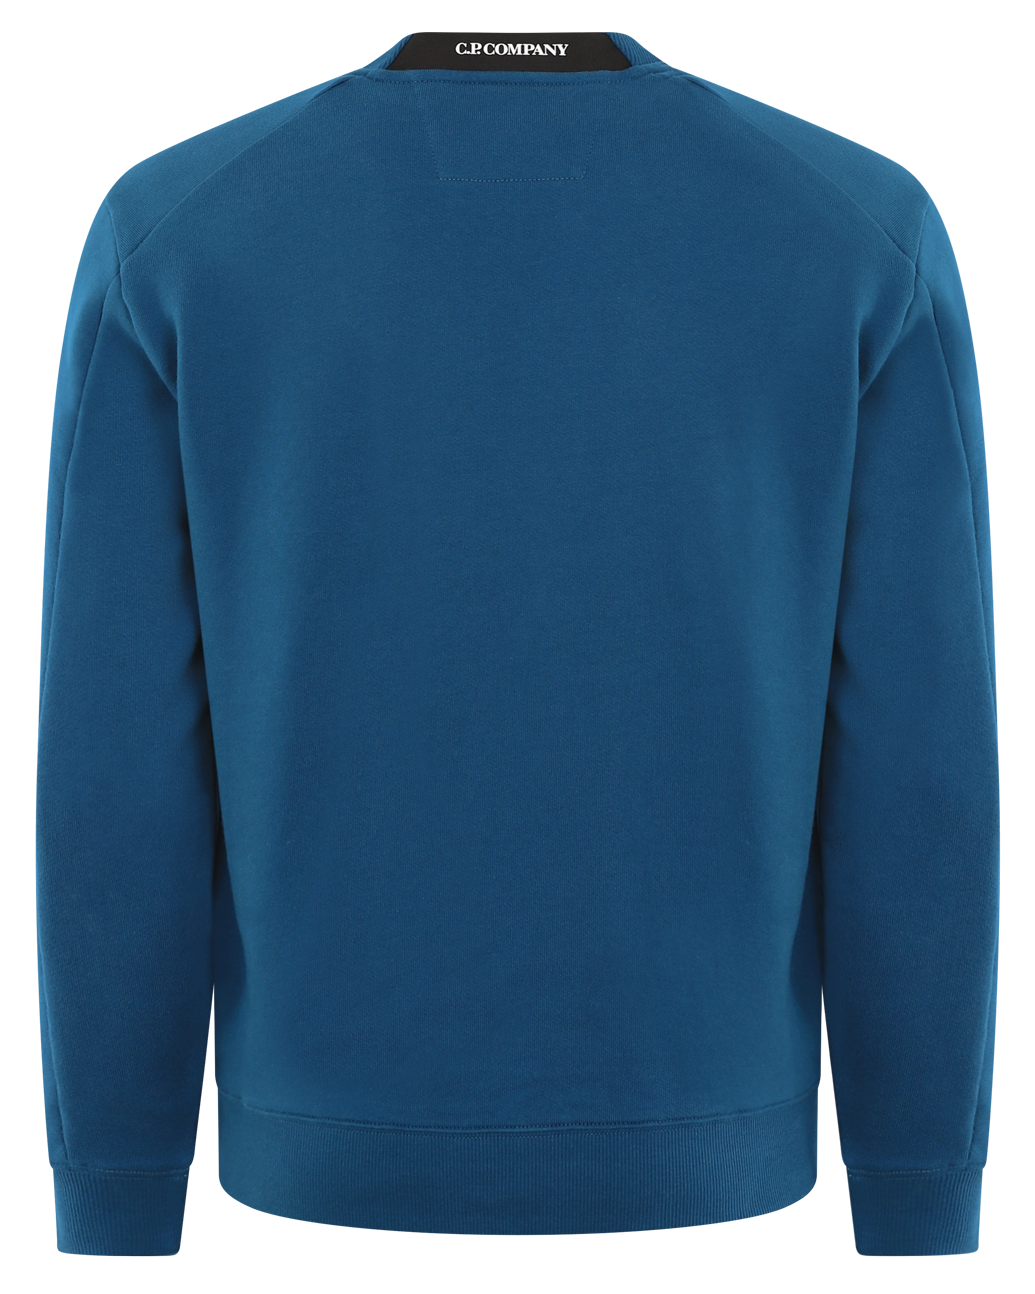 Heren Crew Neck Sweater Blauw